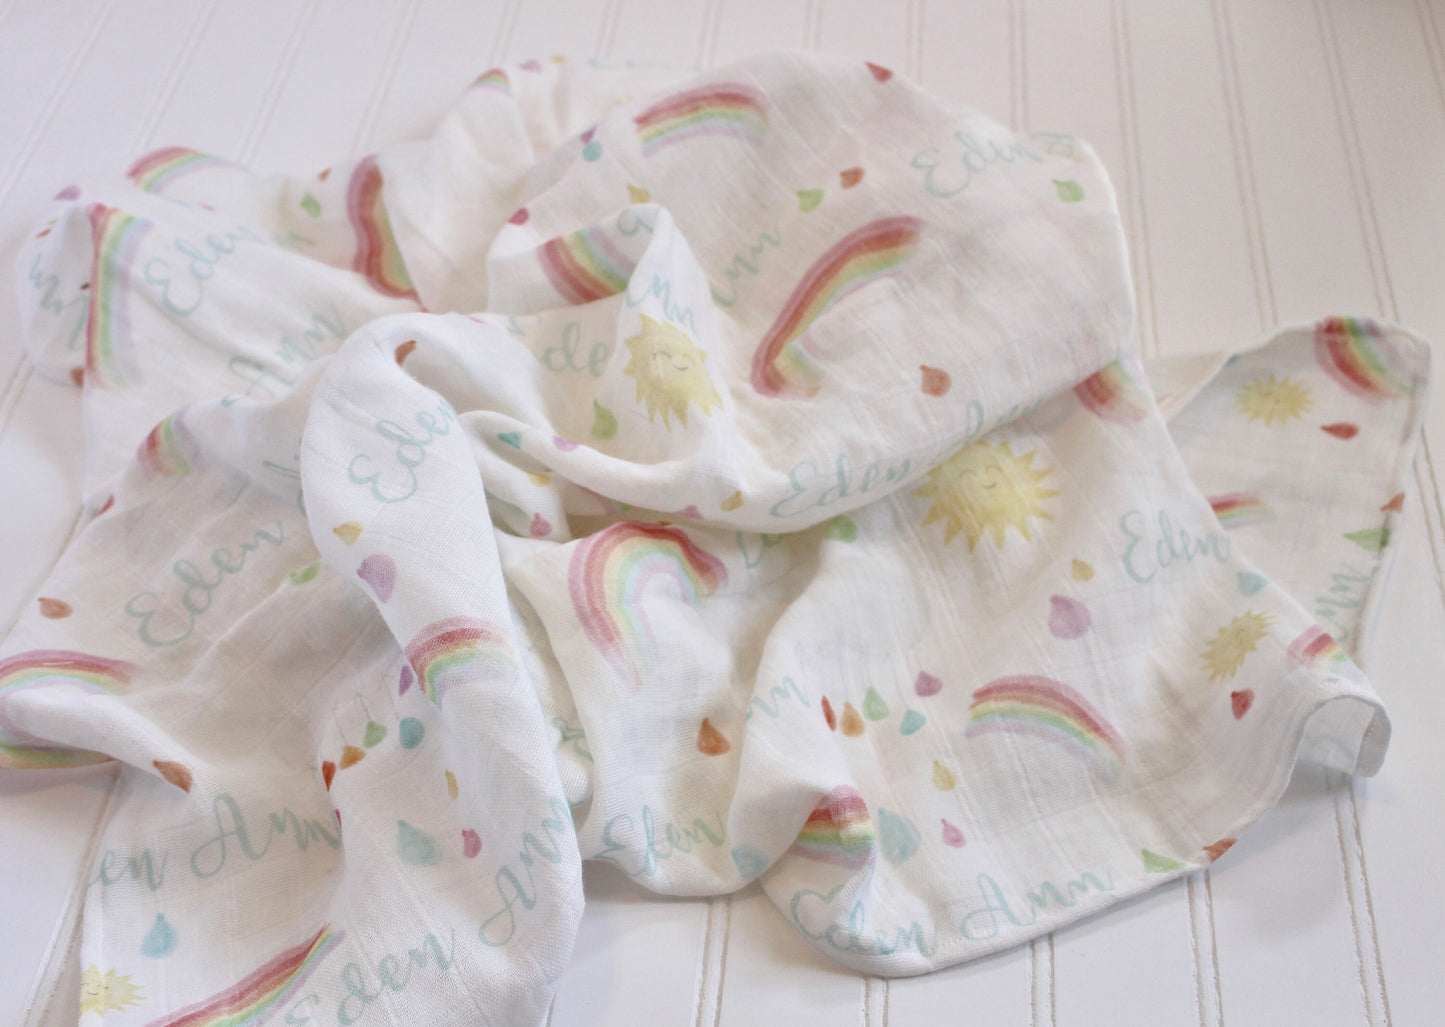 Rainbow Baby Blanket/Personalized Blanket/Custom Baby Blanket/Organic/Swaddle Blanket/New Baby Gift/Baby Shower Gift/Sun